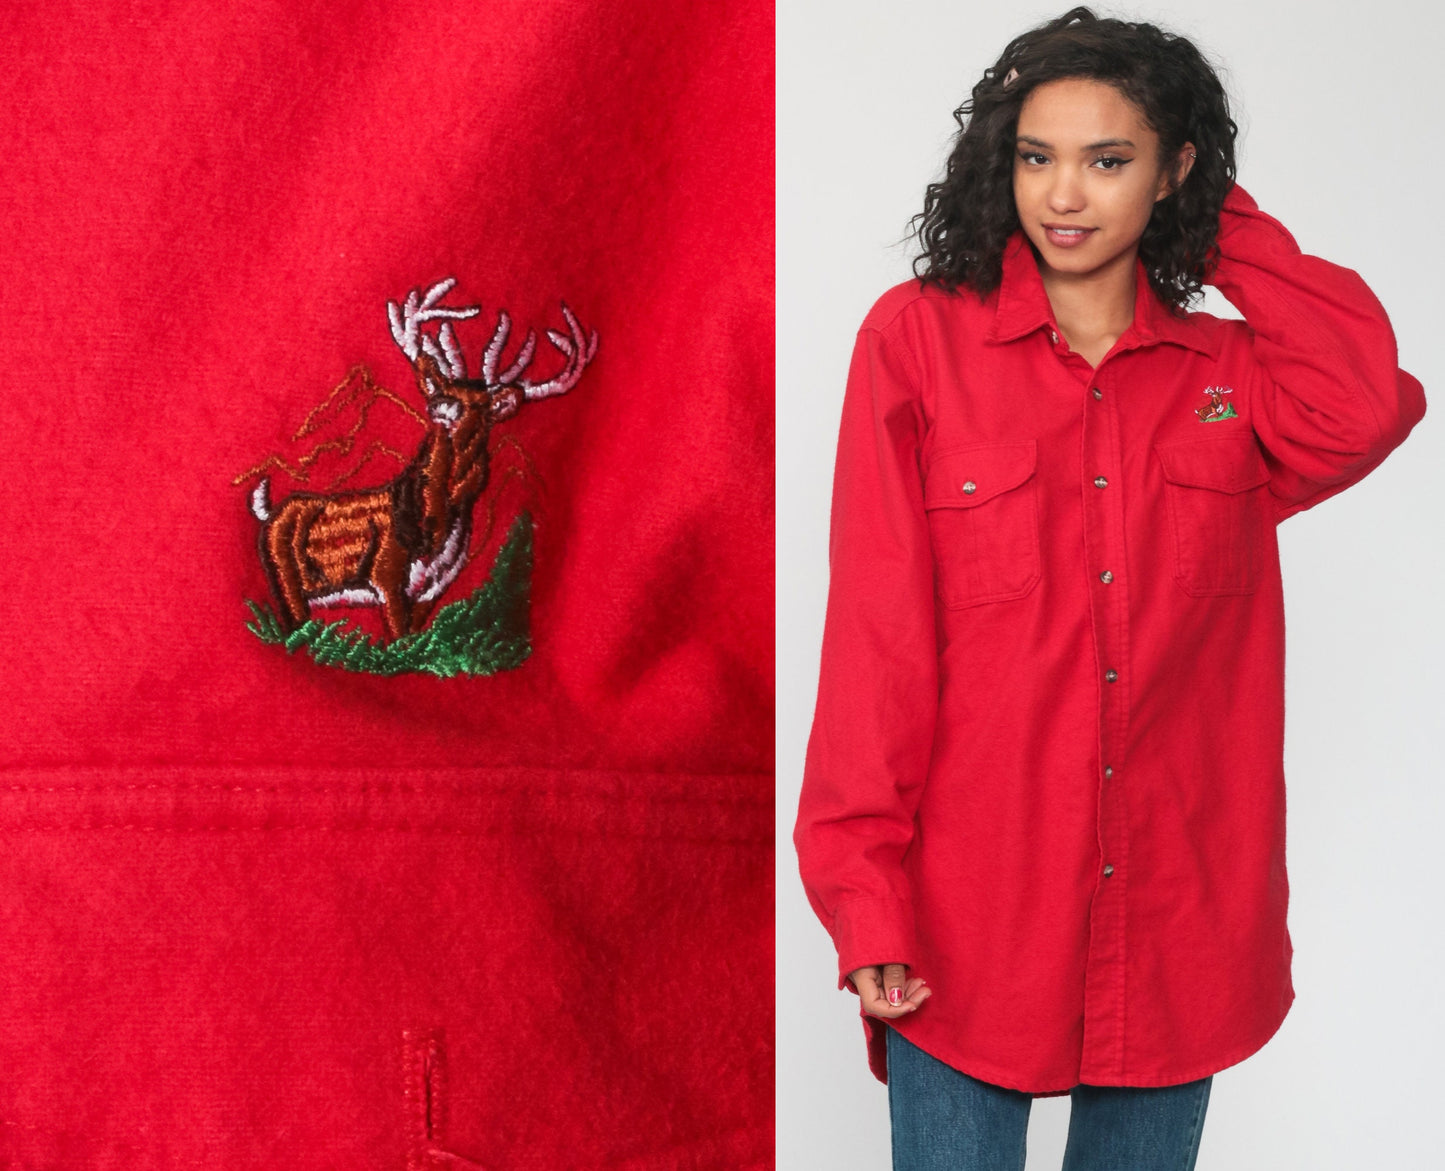 Cotton Deer Shirt 90s Red Shirt Button Up Top 1990s Long Sleeve Shirt Hunting Animal Vintage Hipster Plain Shirt Collared Men's Large Tall